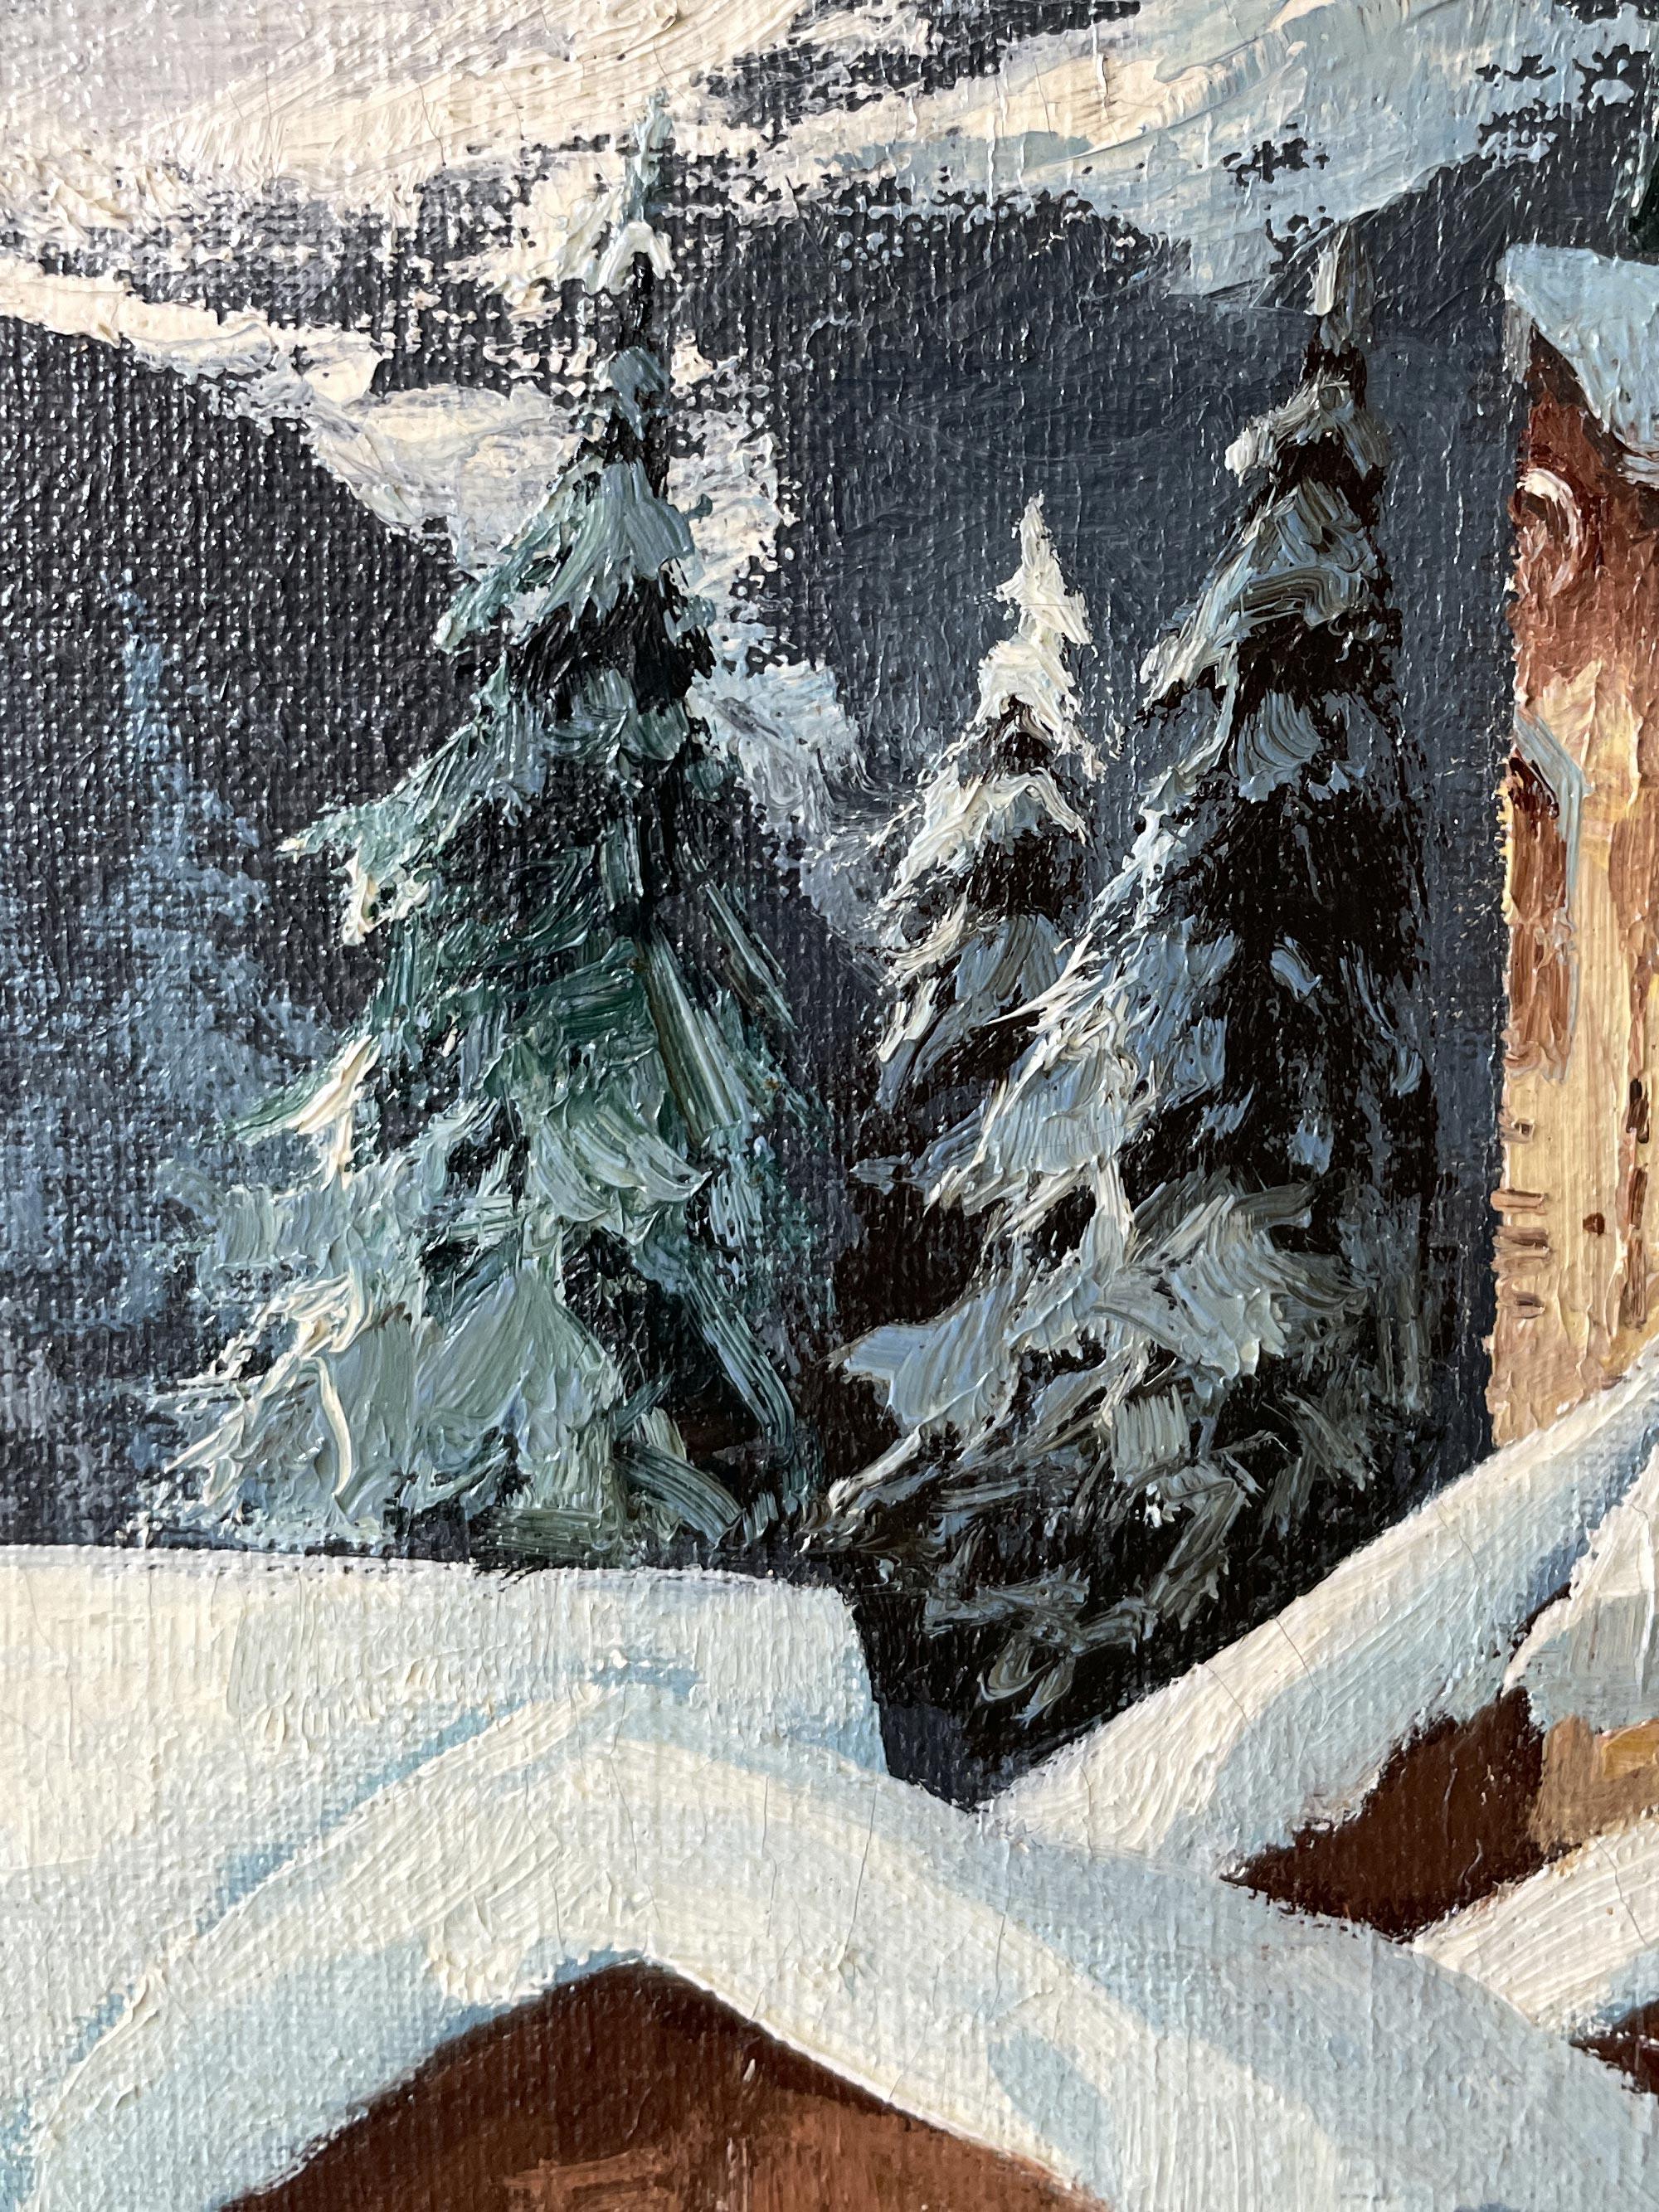 Mid-20th Century Snowy Landscape by Arno Lemke Oil on Canvas, 1950